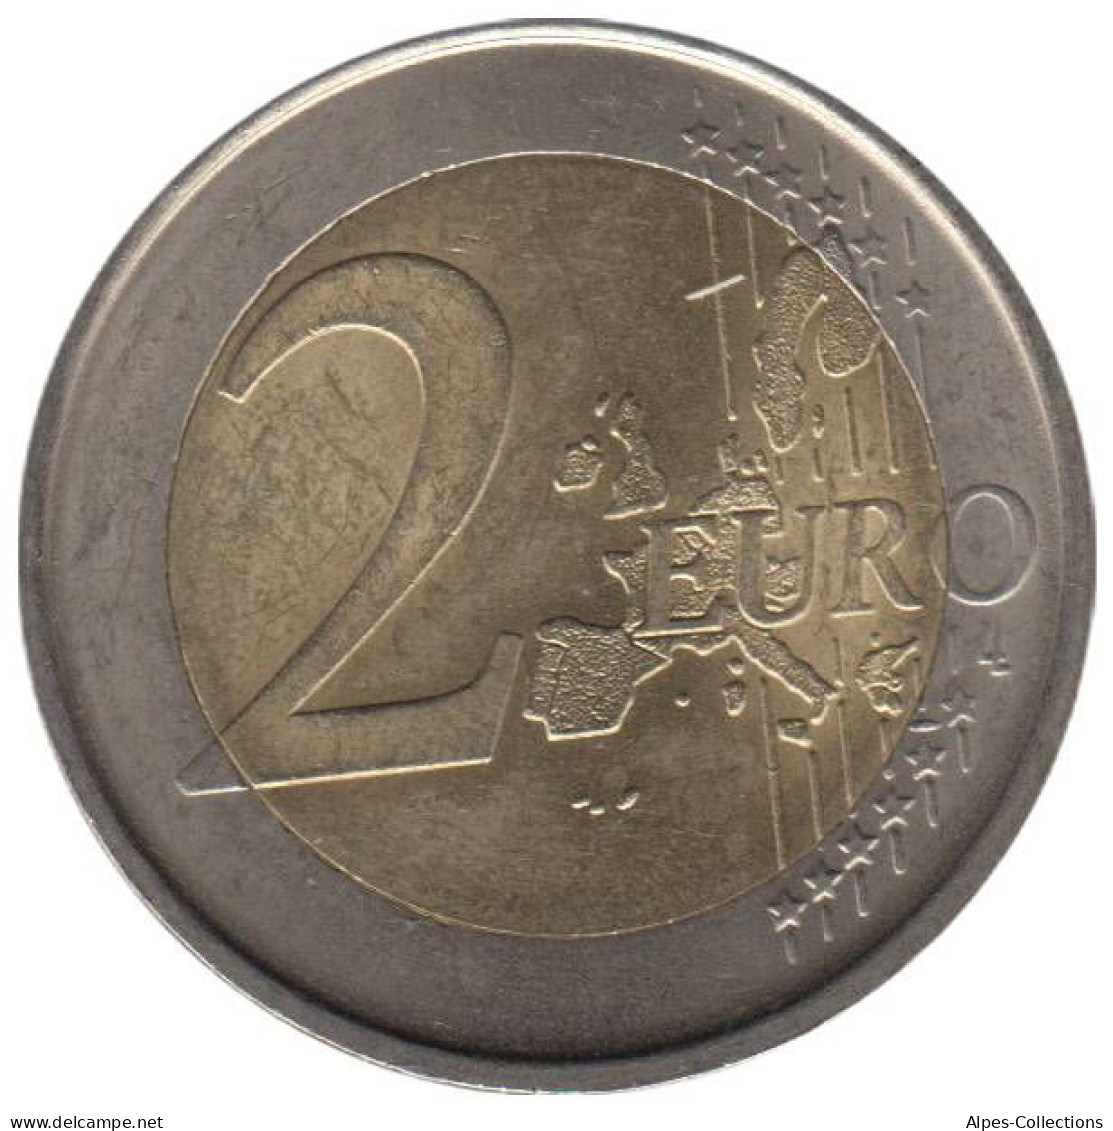 ES20006.1 - ESPAGNE - 2 Euros - 2006 - España